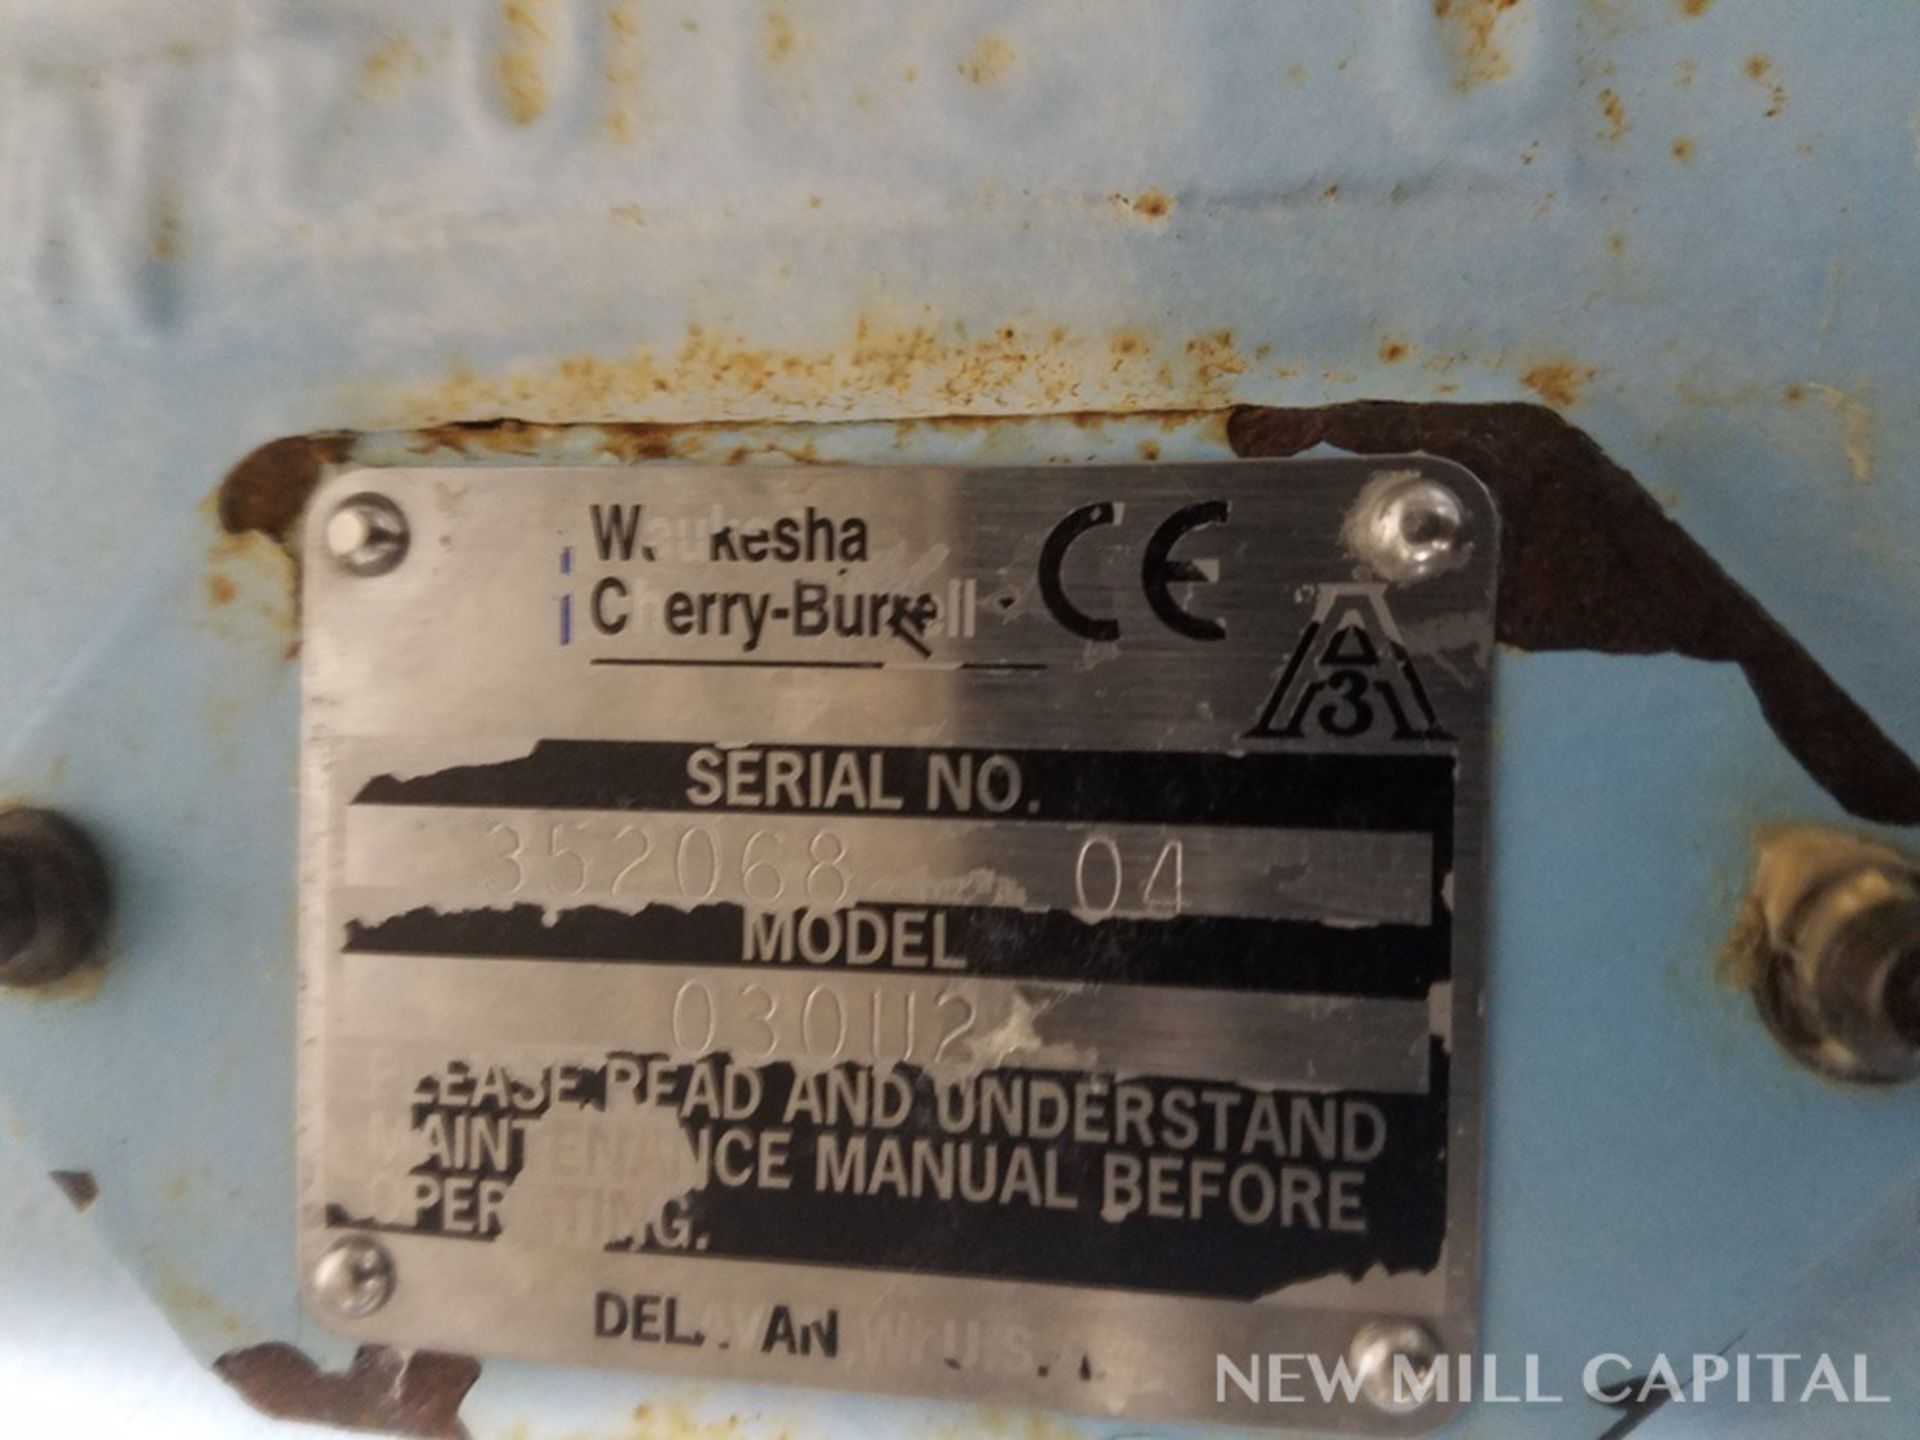 Waukesha Cherry Burrell Positive Displacement Pump, M# 030 U2, S/N 352068-04, 3 | Rigging Fee: $100 - Image 2 of 3